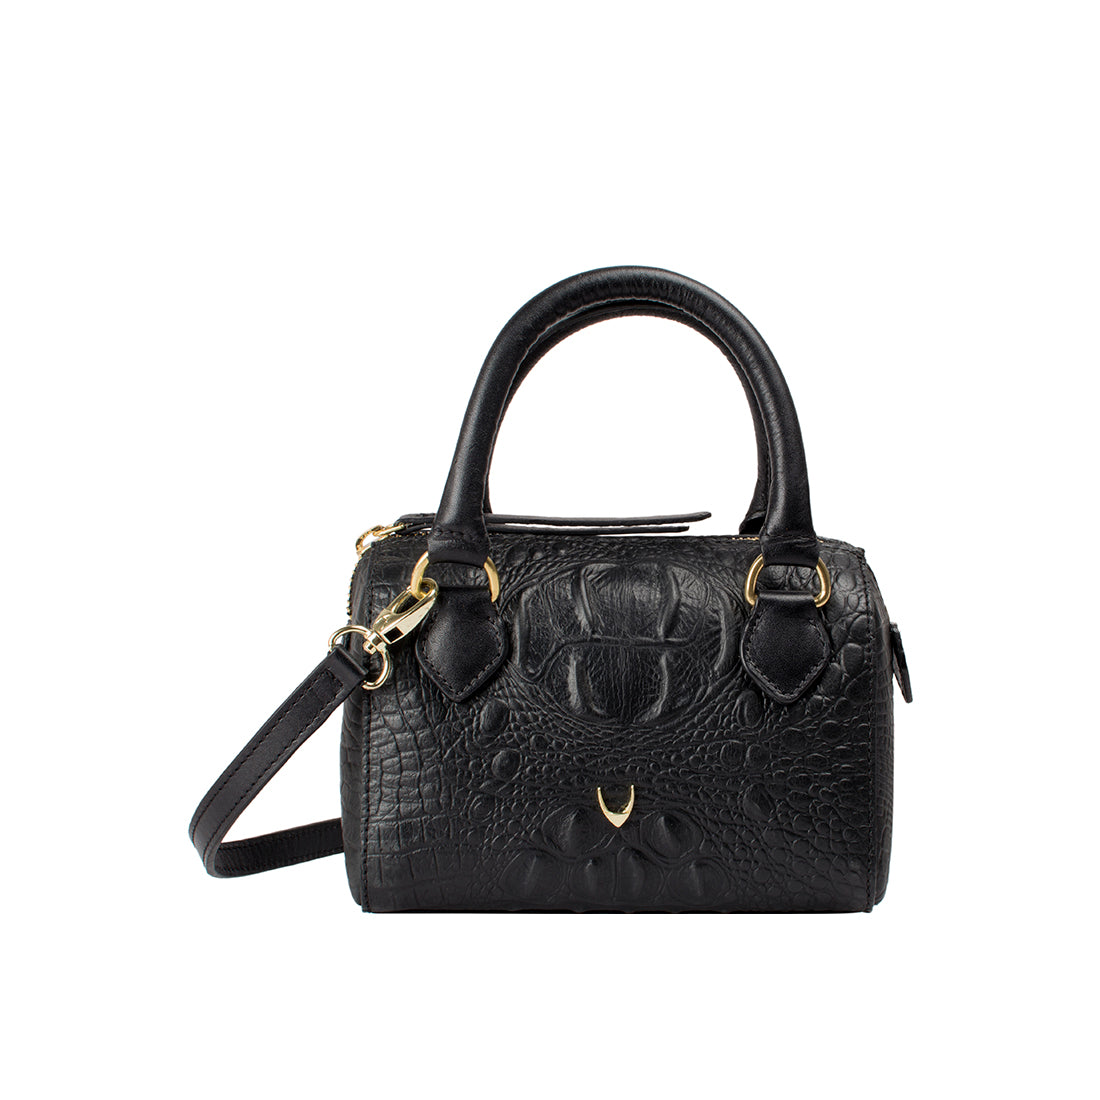 Hidesign Ee Berlin 01 Black Women Handbag: Buy Hidesign Ee Berlin